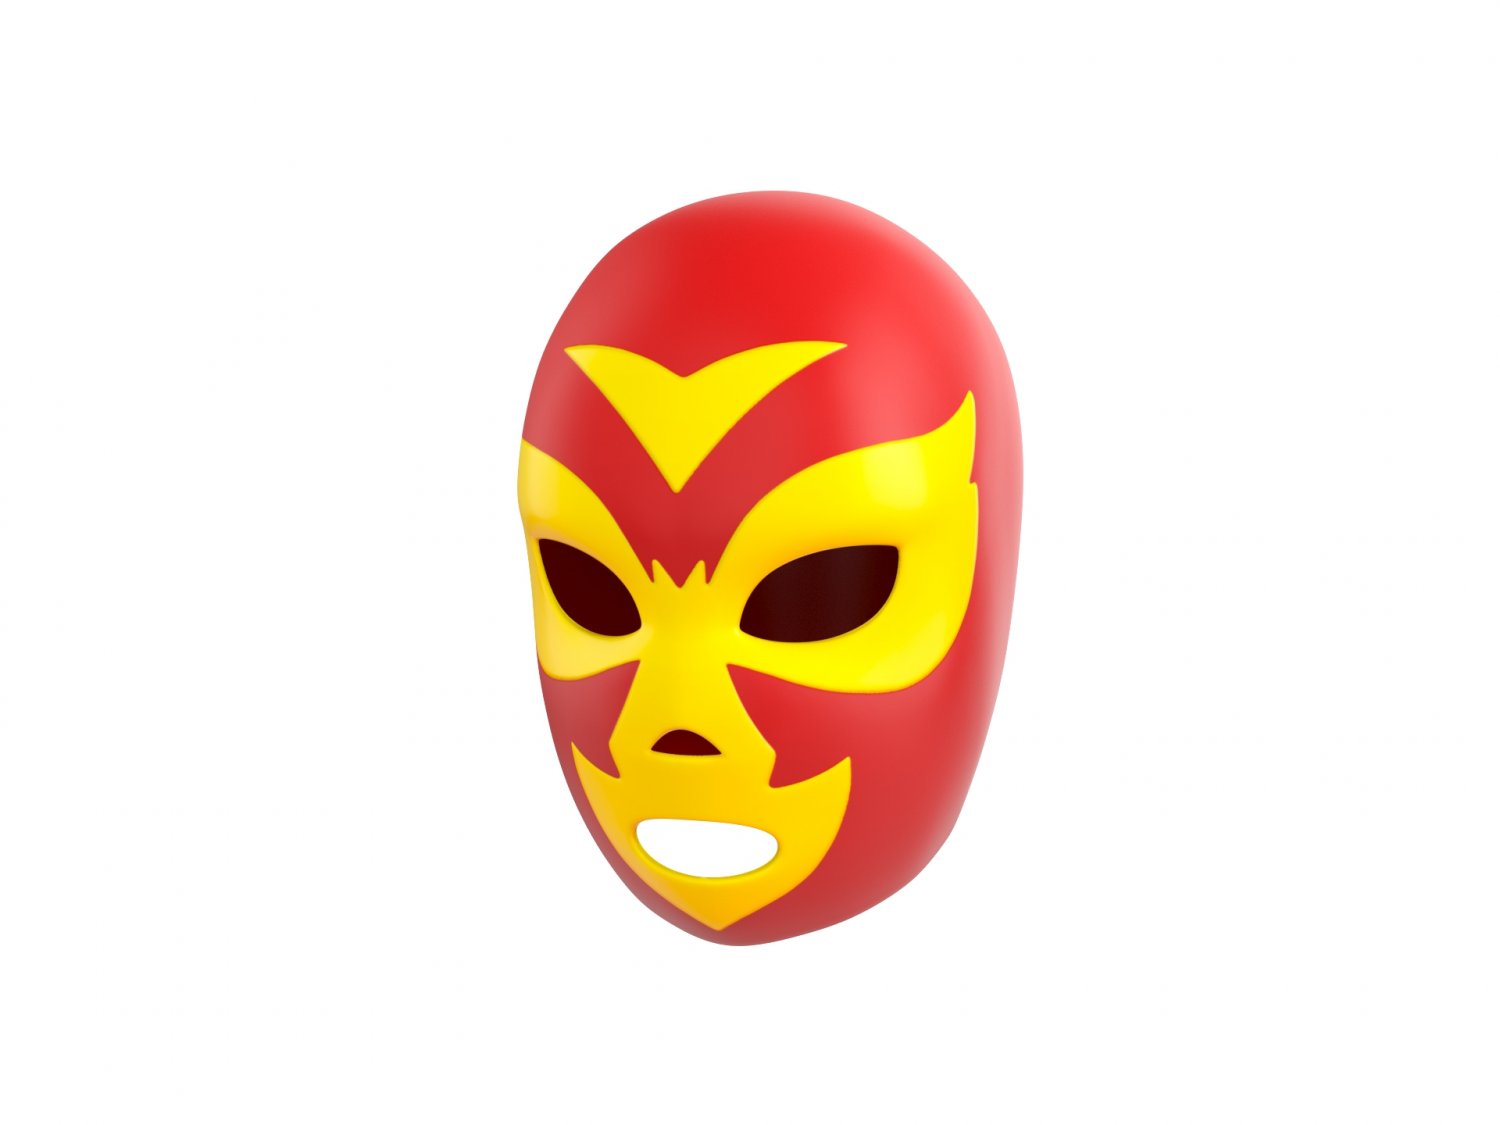 Blank mask 3D Model in Other 3DExport